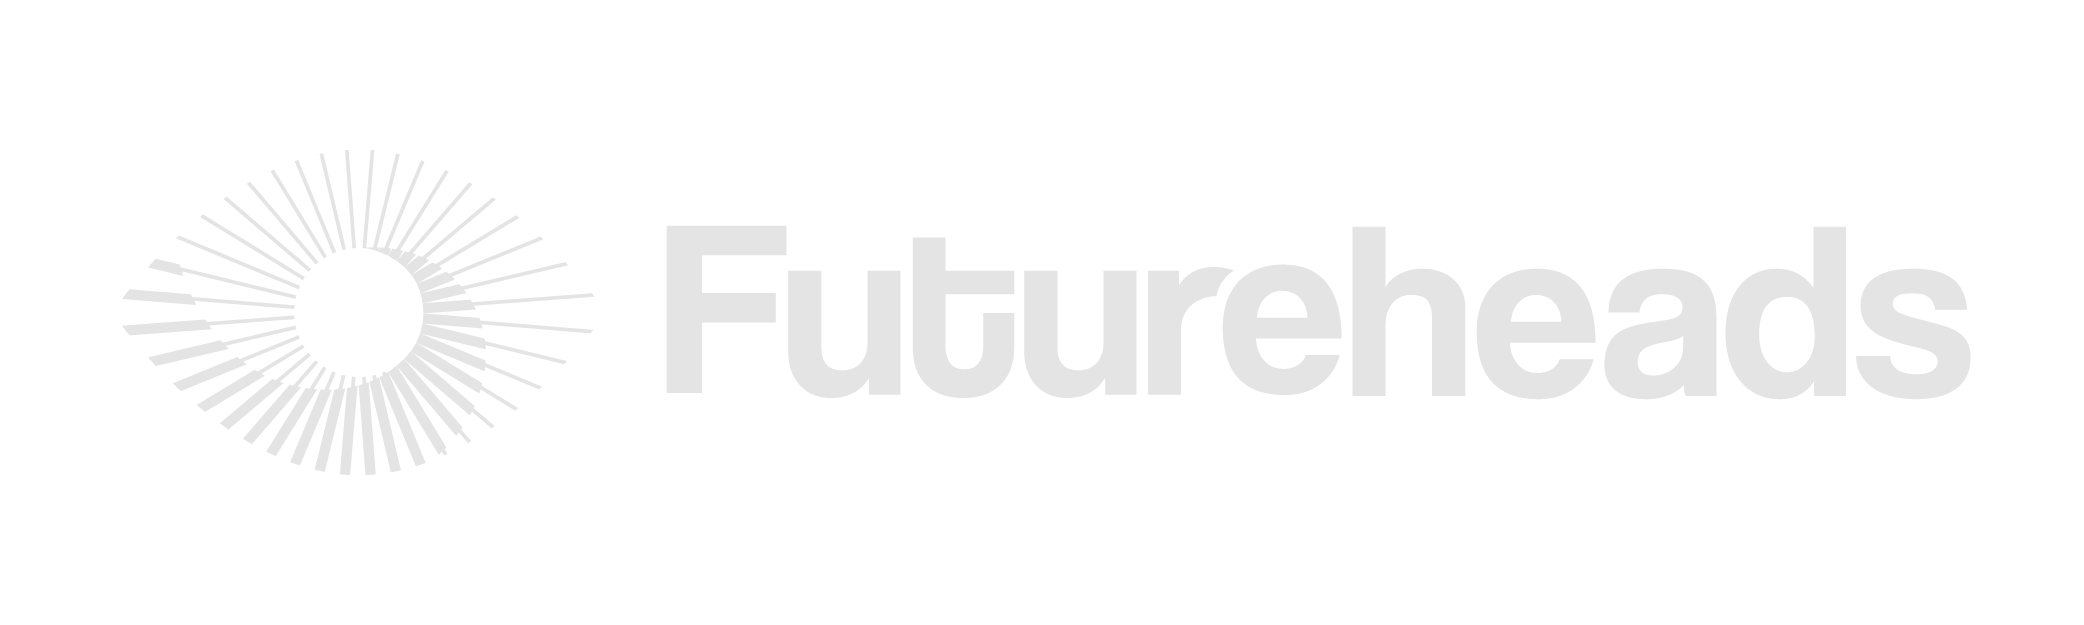 logo for Futureheads Recruitment Ltd